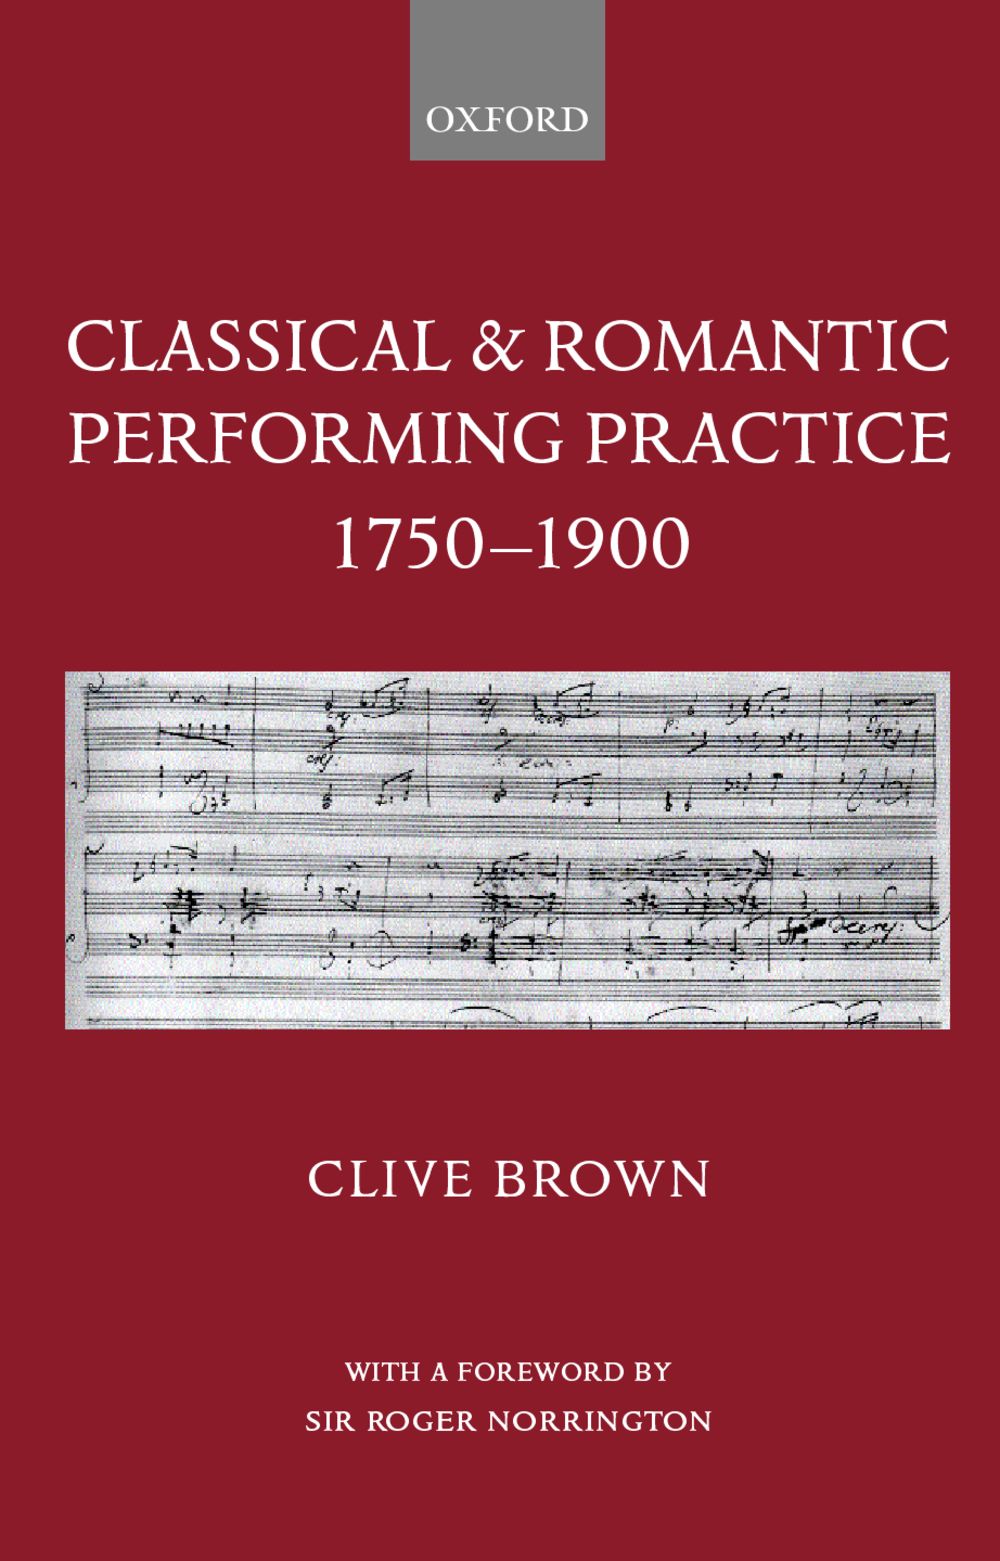 Classical & Romantic Performing Practice 1750-1900 Sheet Music Songbook